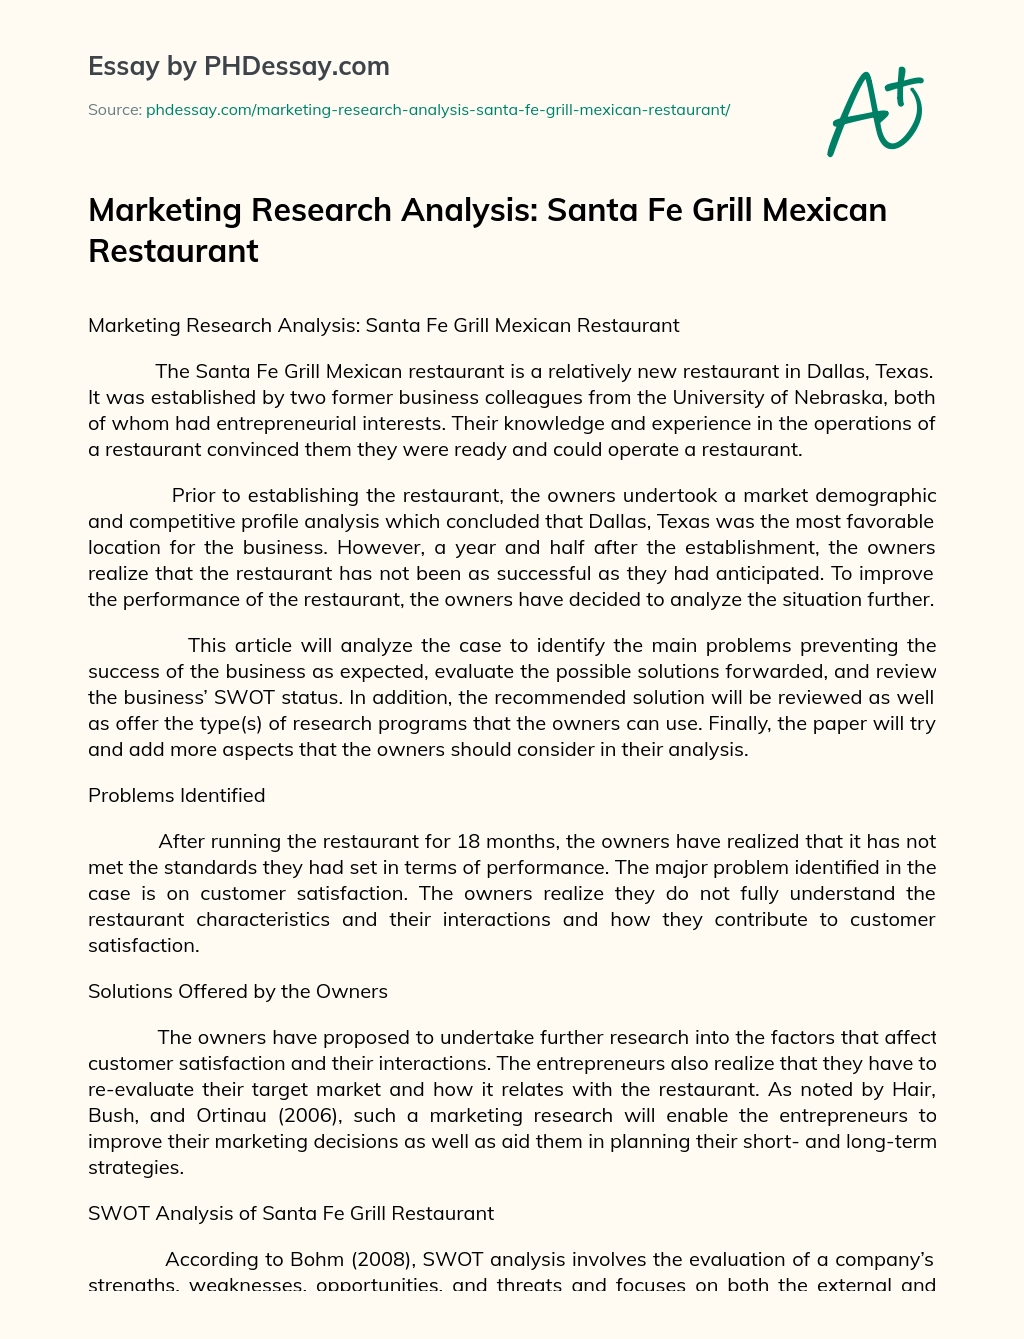 Marketing Research Analysis: Santa Fe Grill Mexican Restaurant essay